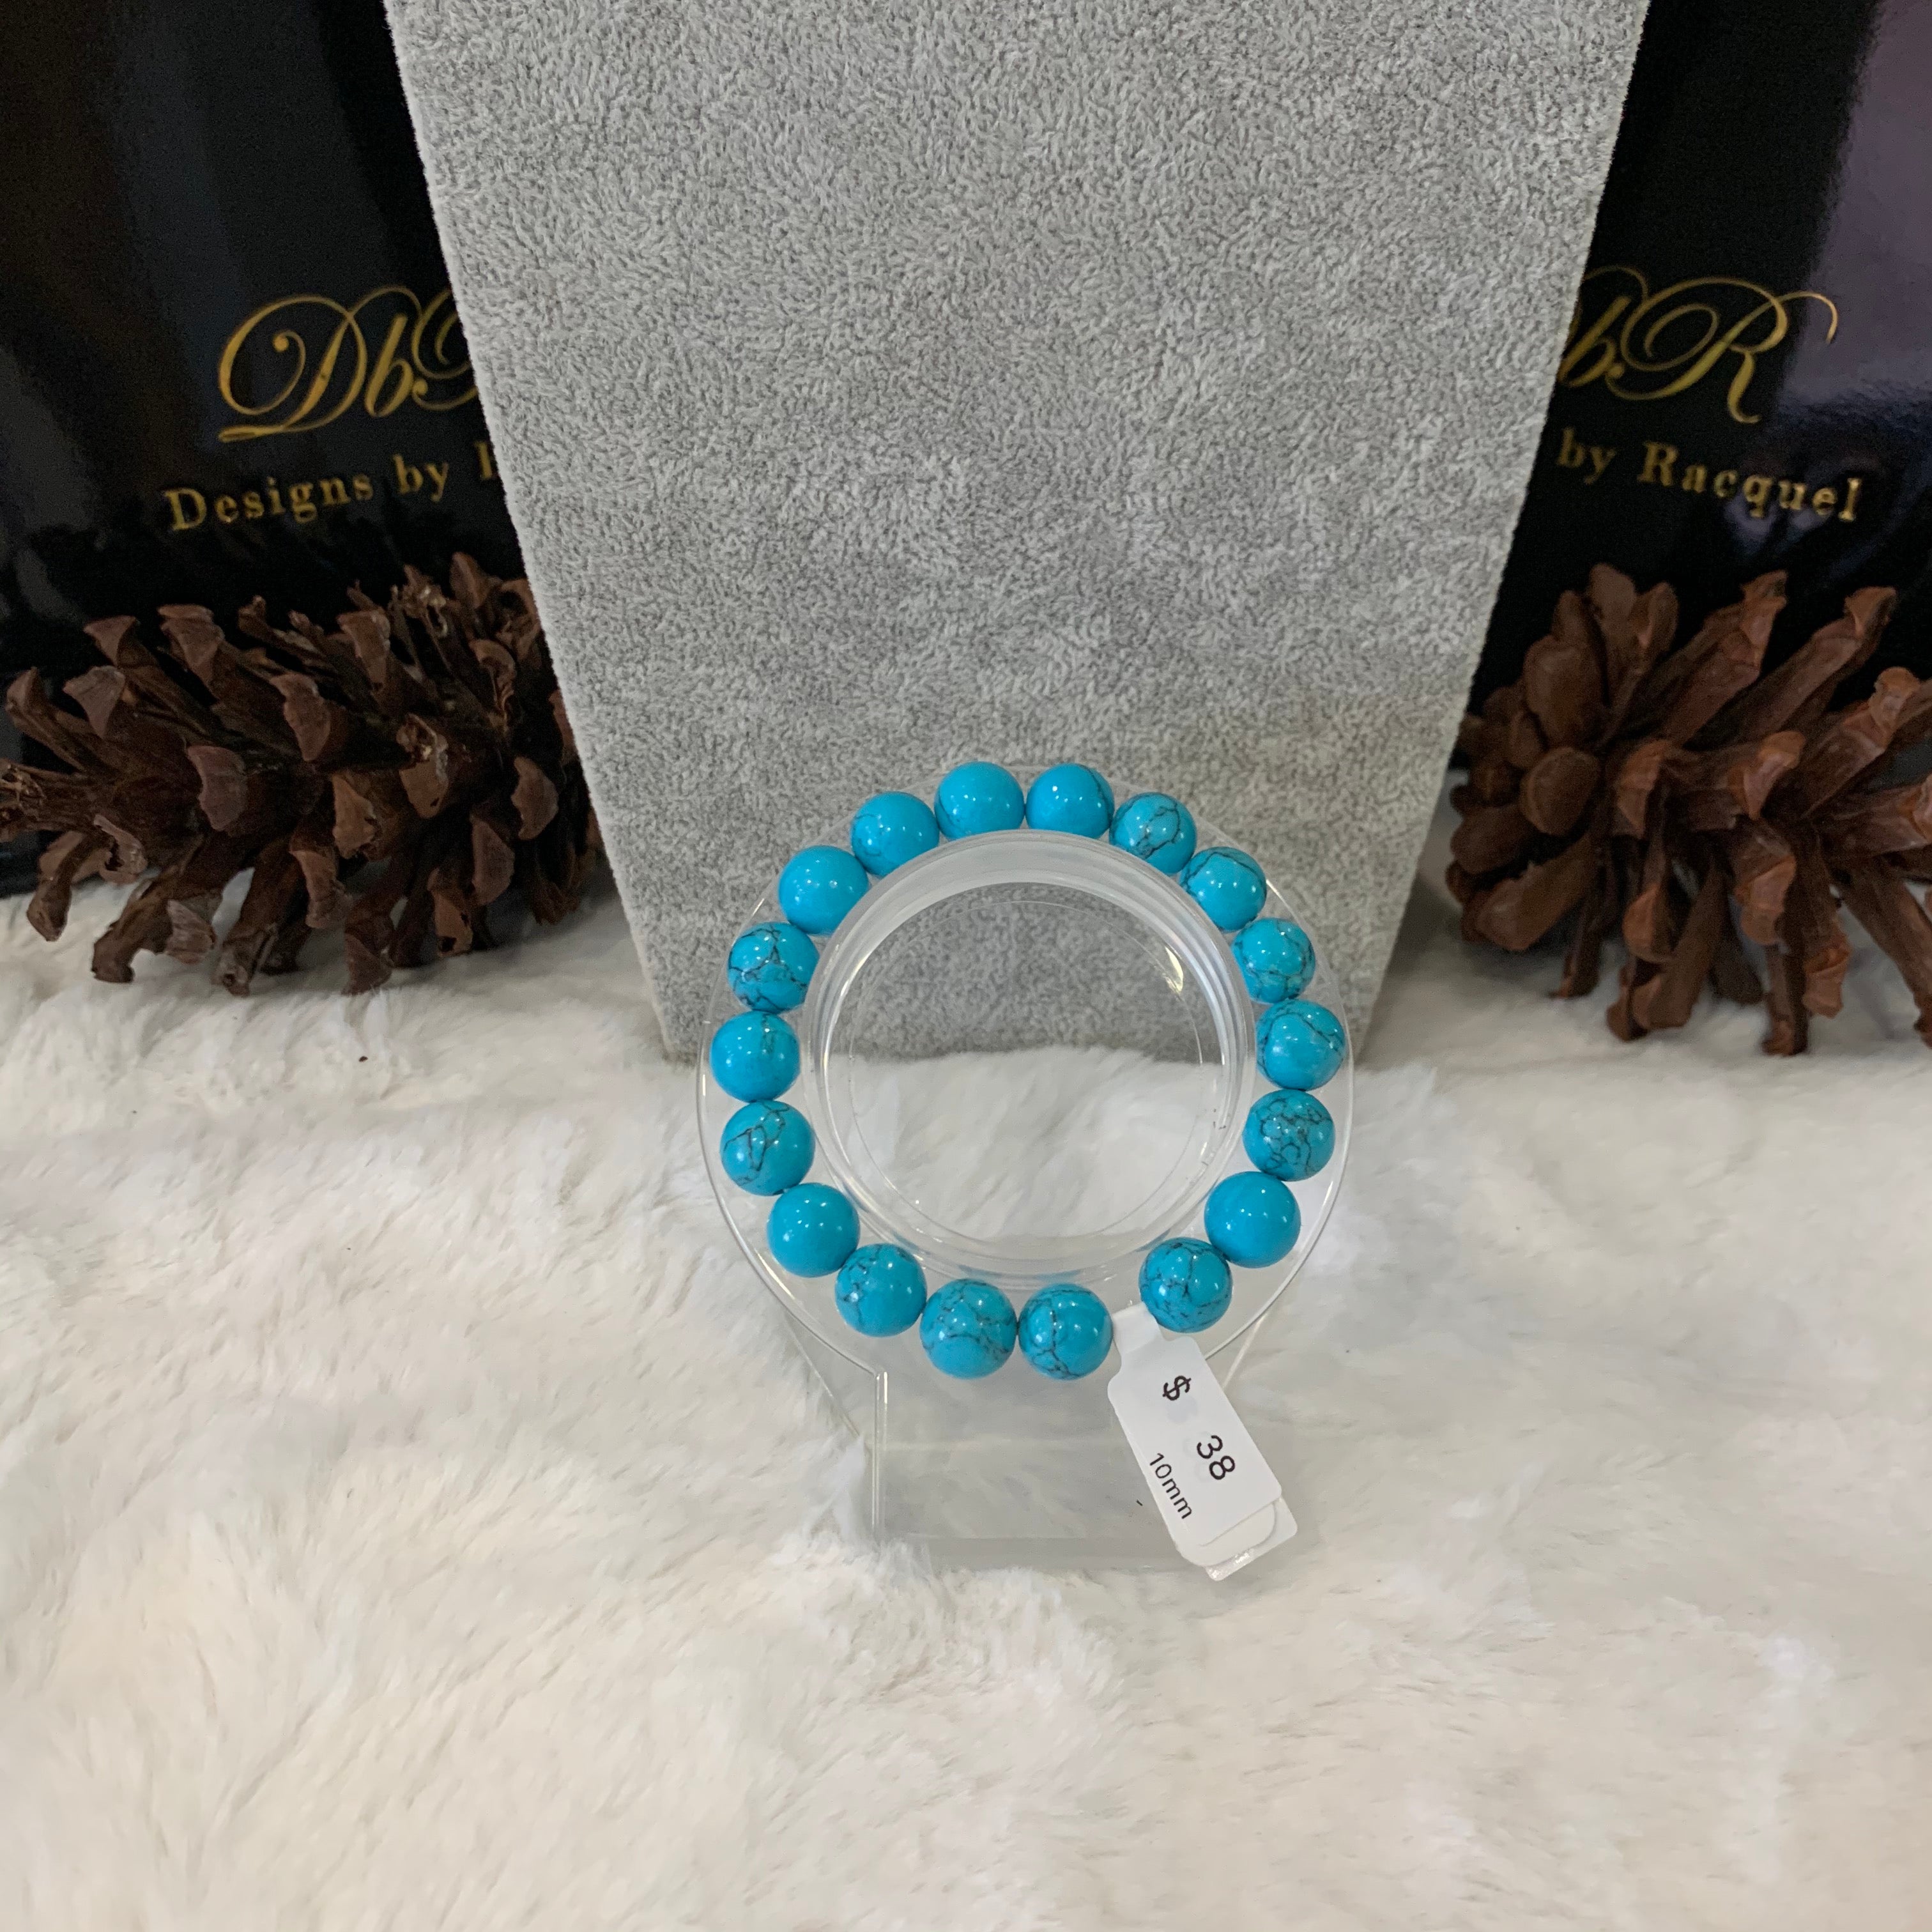 Turquoise Bead Bracelet (JBB-0010)